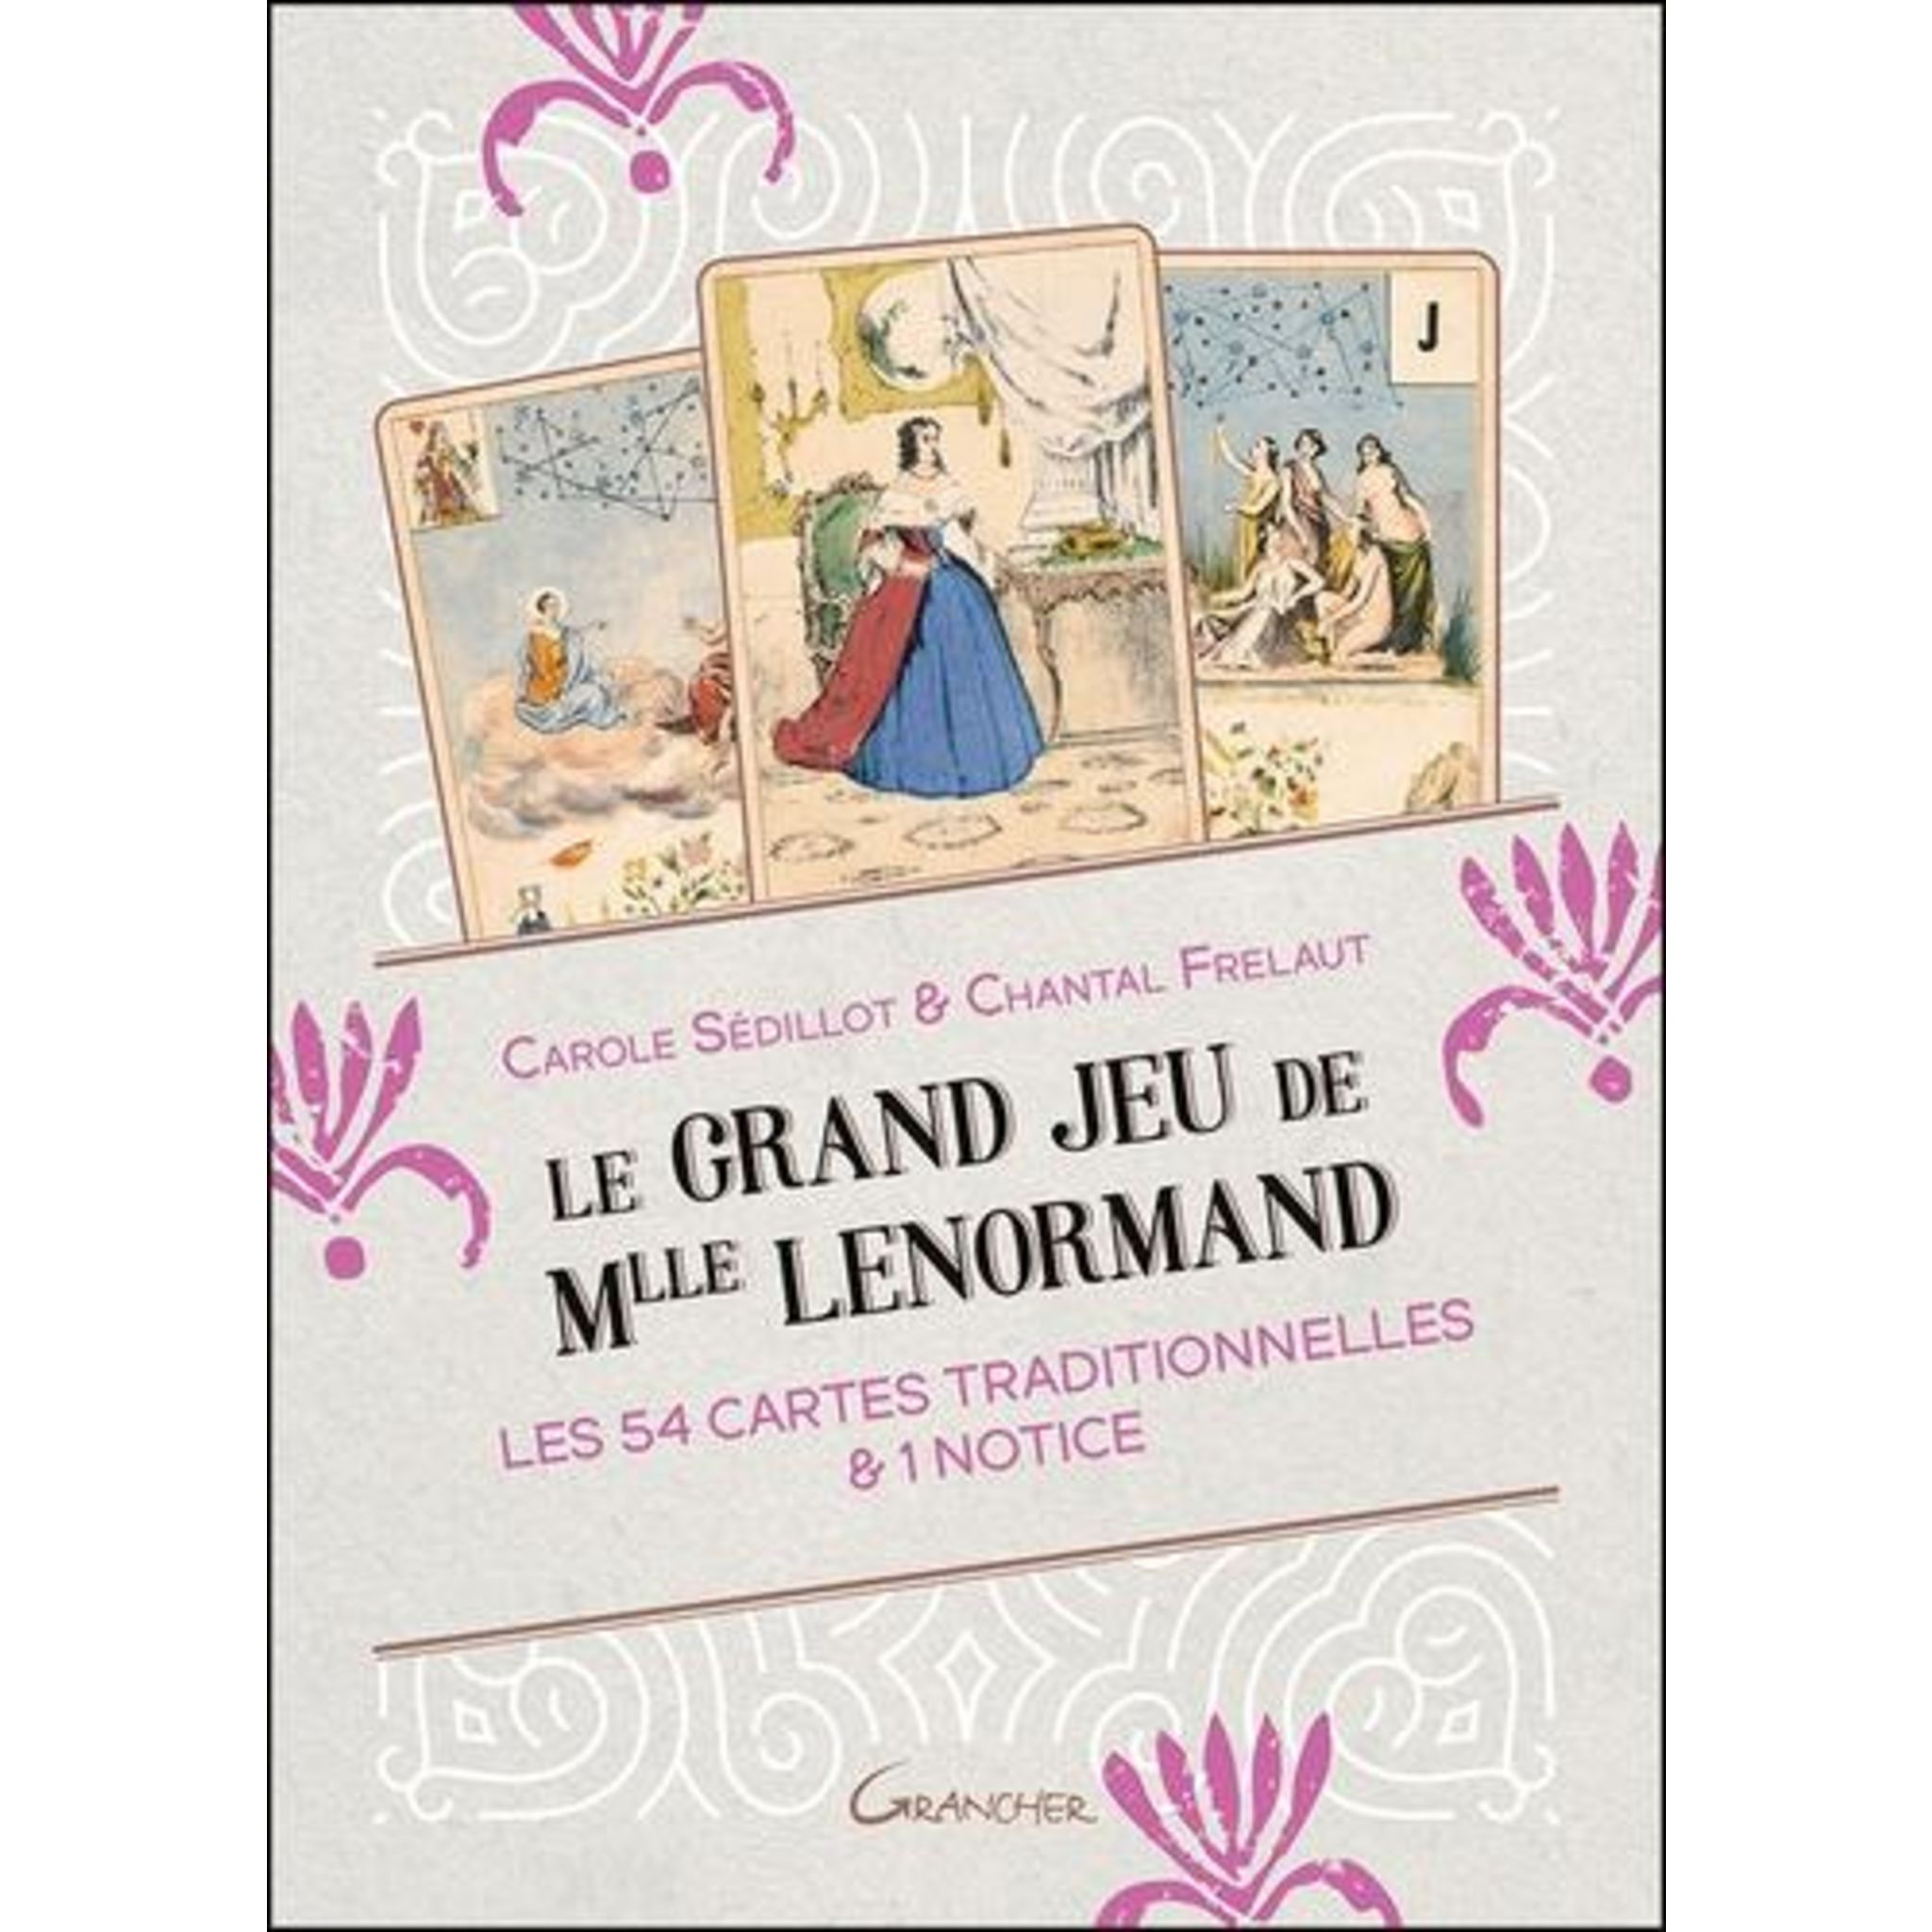 Les tarots de Mlle Lenormand (French Edition)